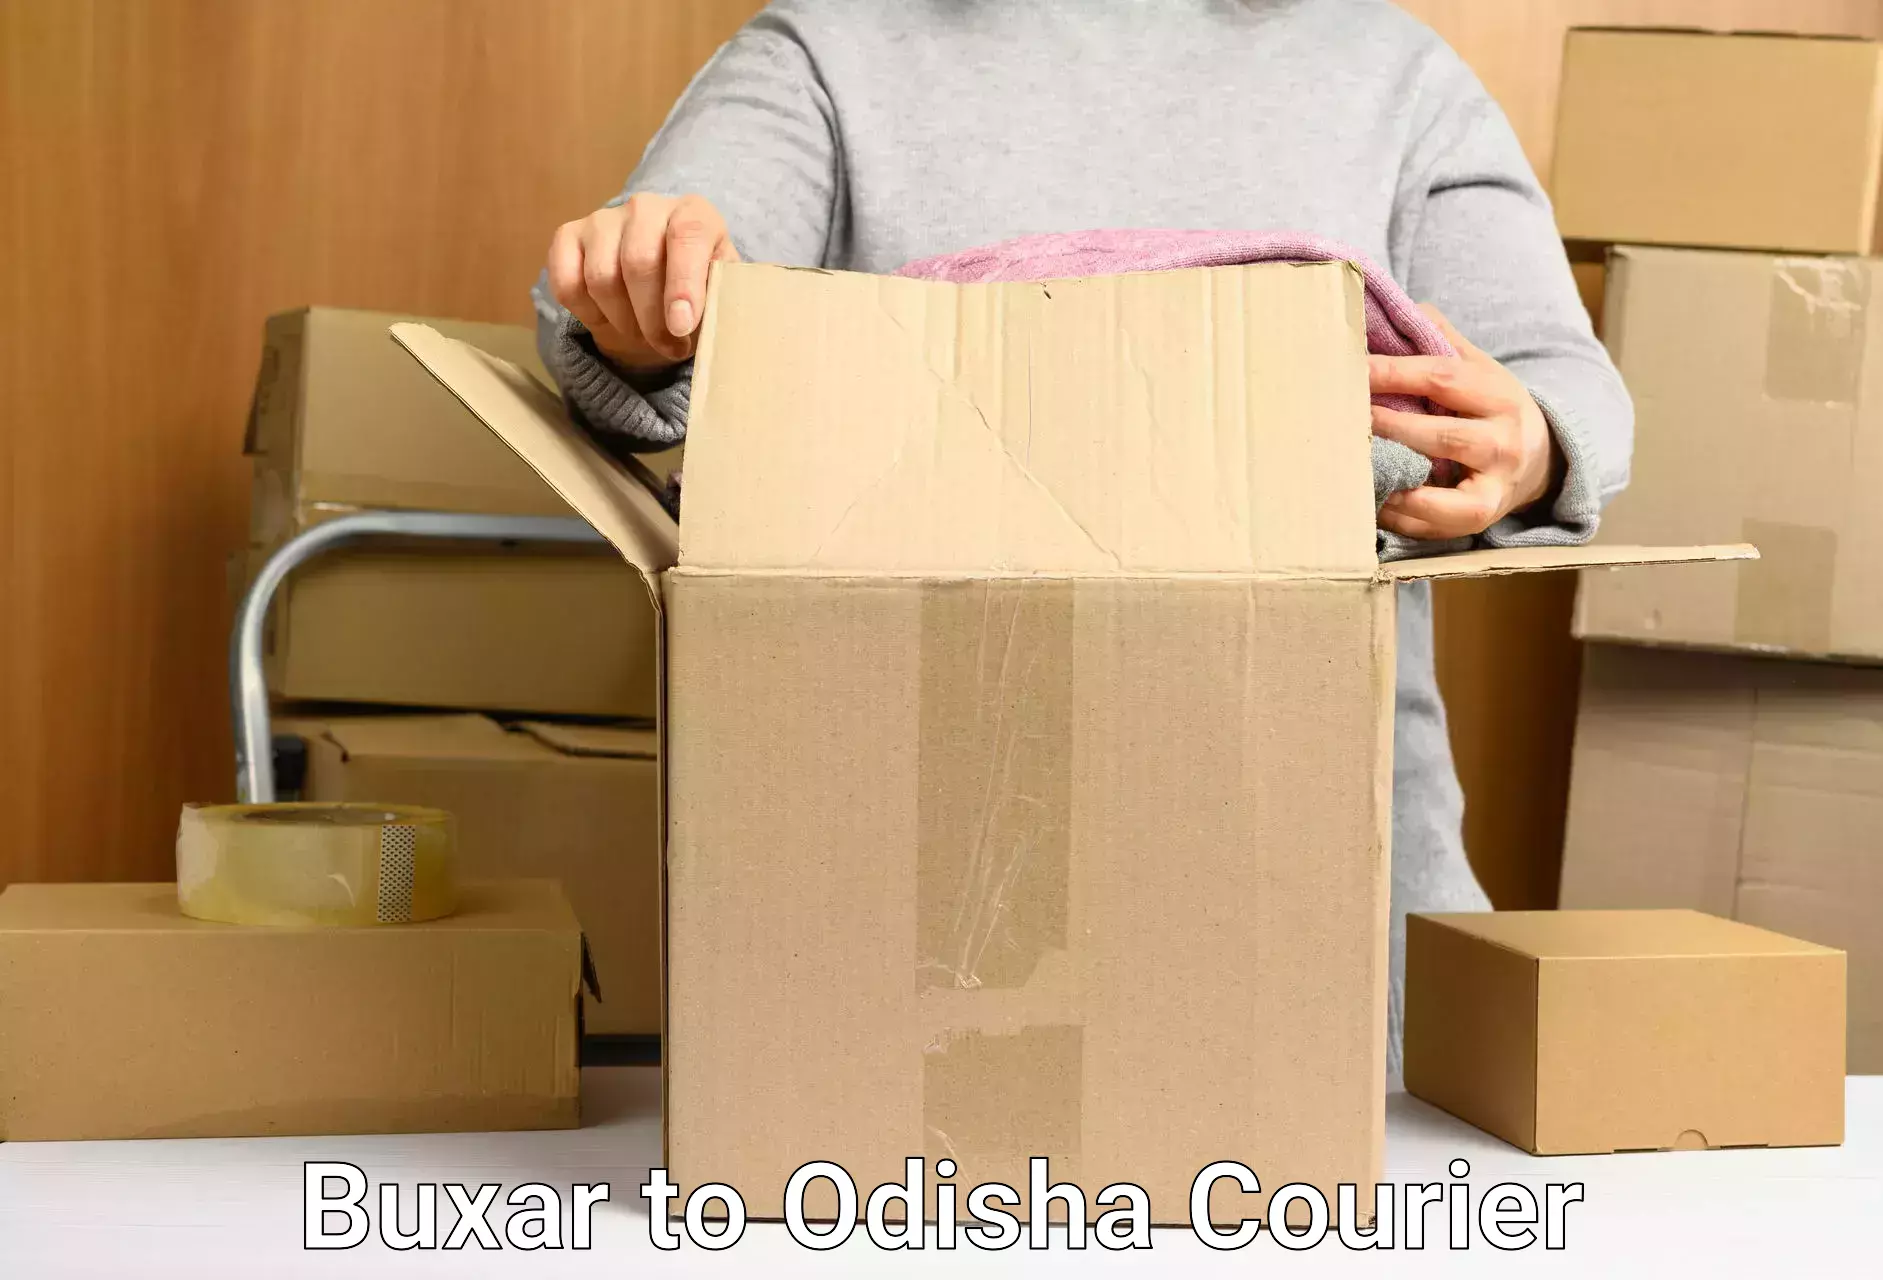 Professional courier handling Buxar to Kishorenagar